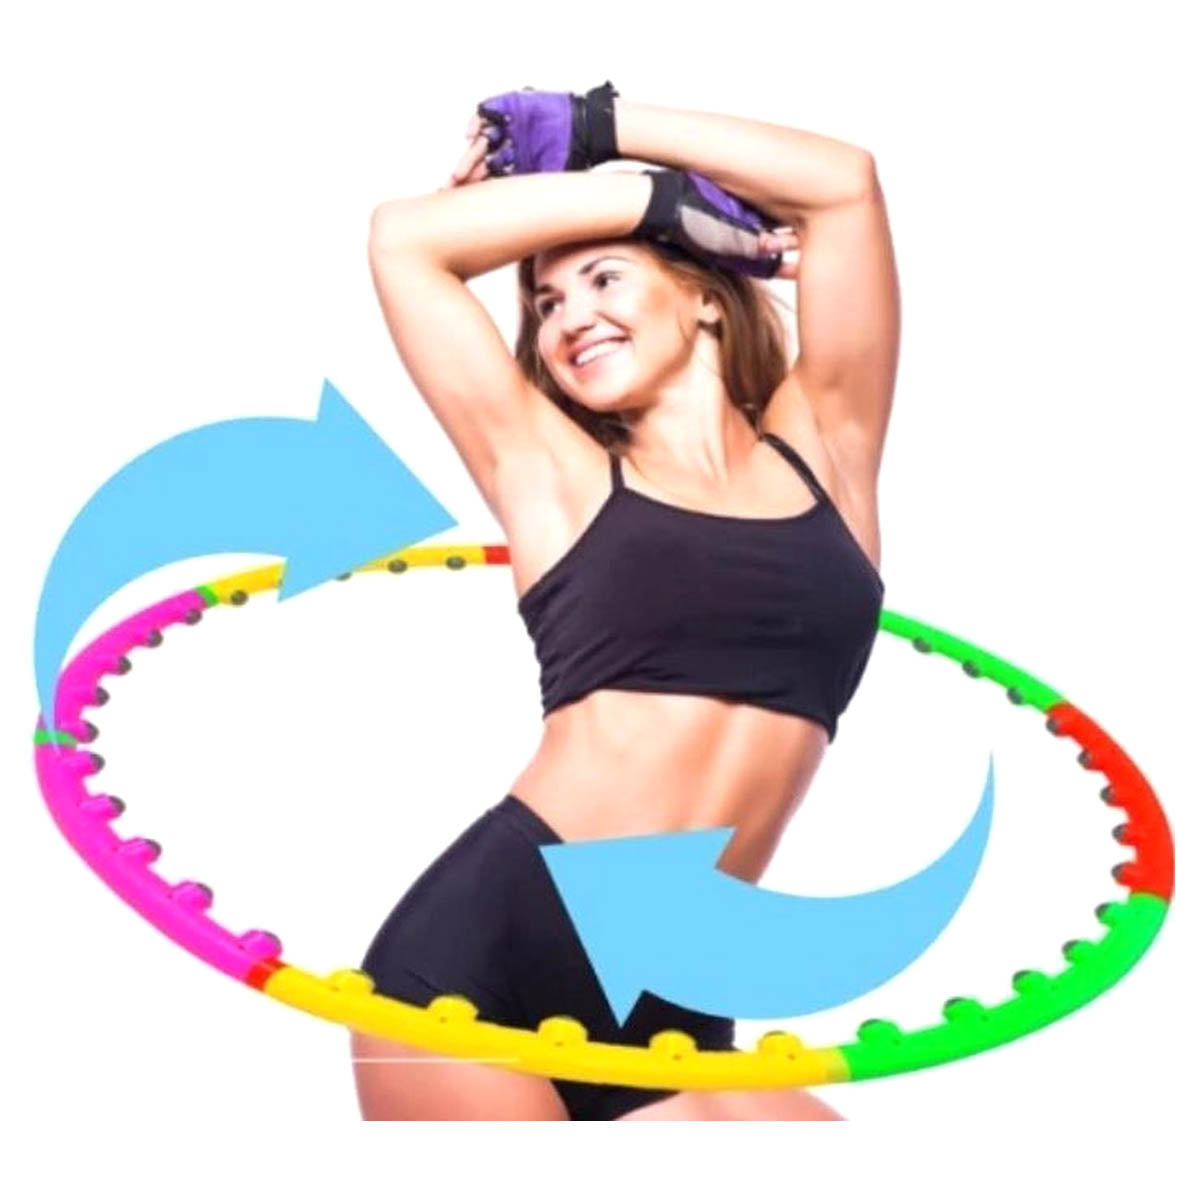 <tc>Ariko</tc> Fitness Massage hoop Ø 98cm | 1 kg | With 40 magnetic balls | Hula Hoop | Sports Hula Hoop | Weighted Hoop | Sports Hoop | Fat burning | Fitness | Rainbow